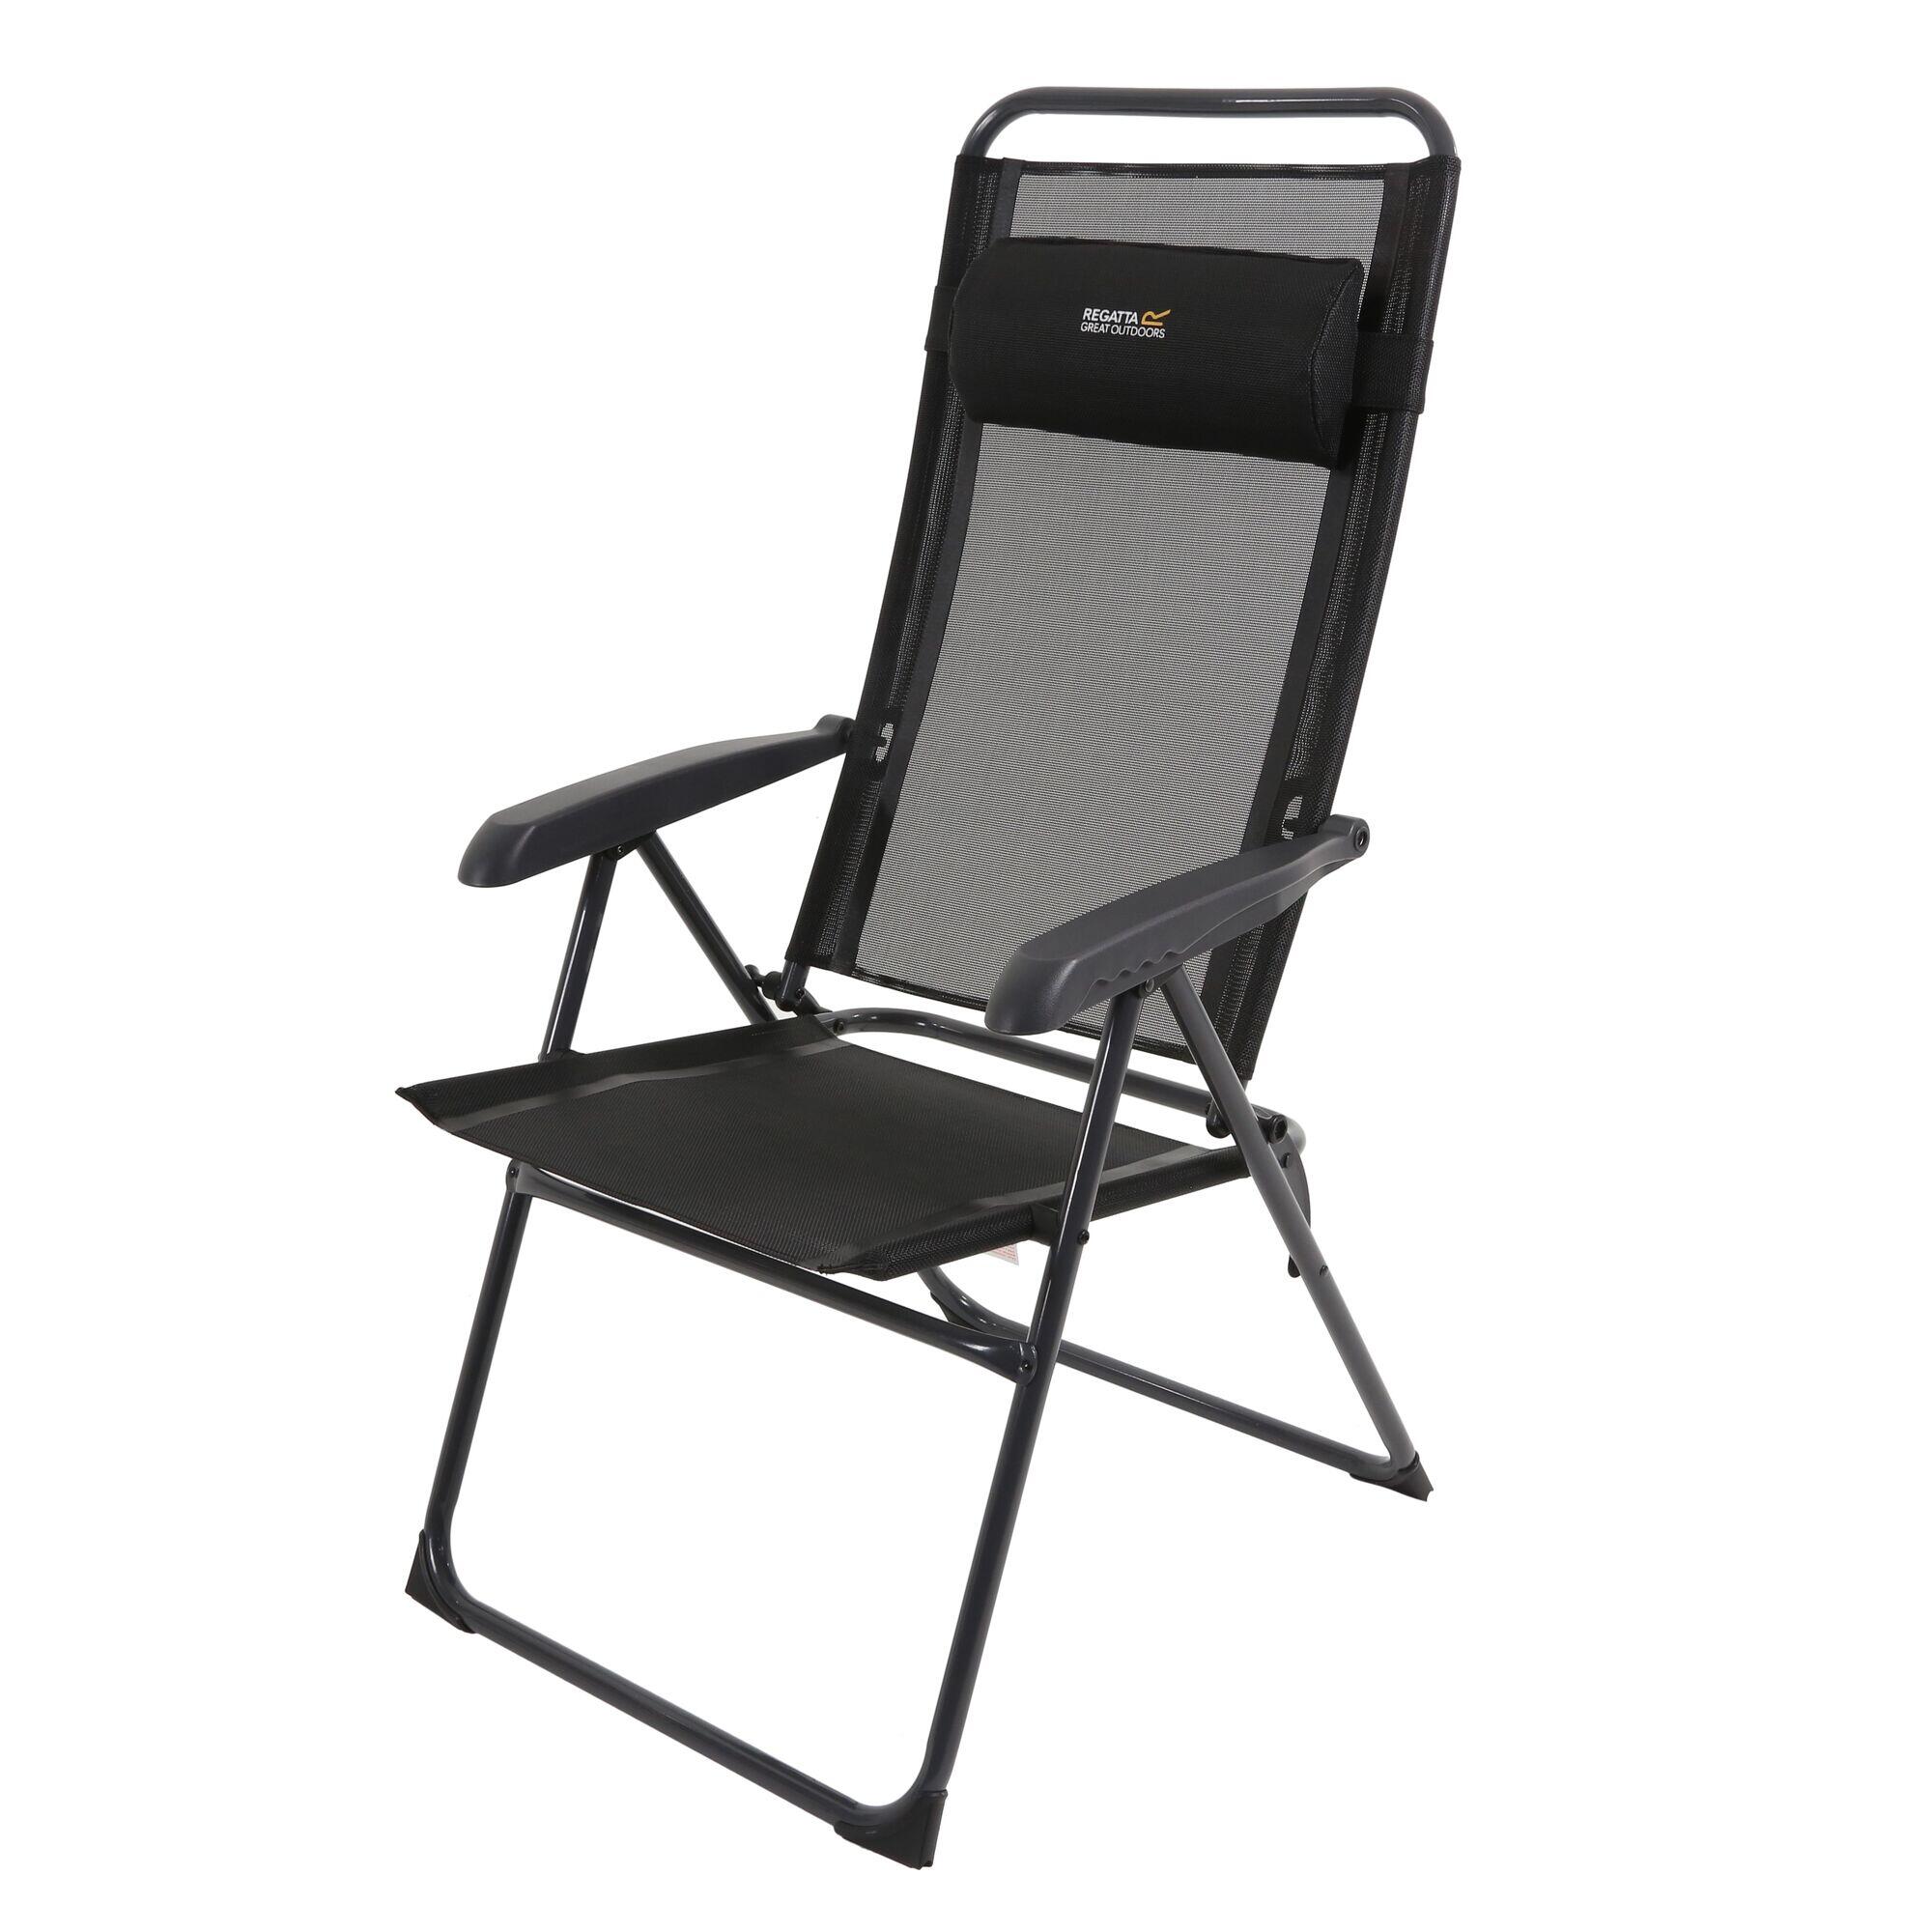 REGATTA Colico Adults' Camping Chair - Black